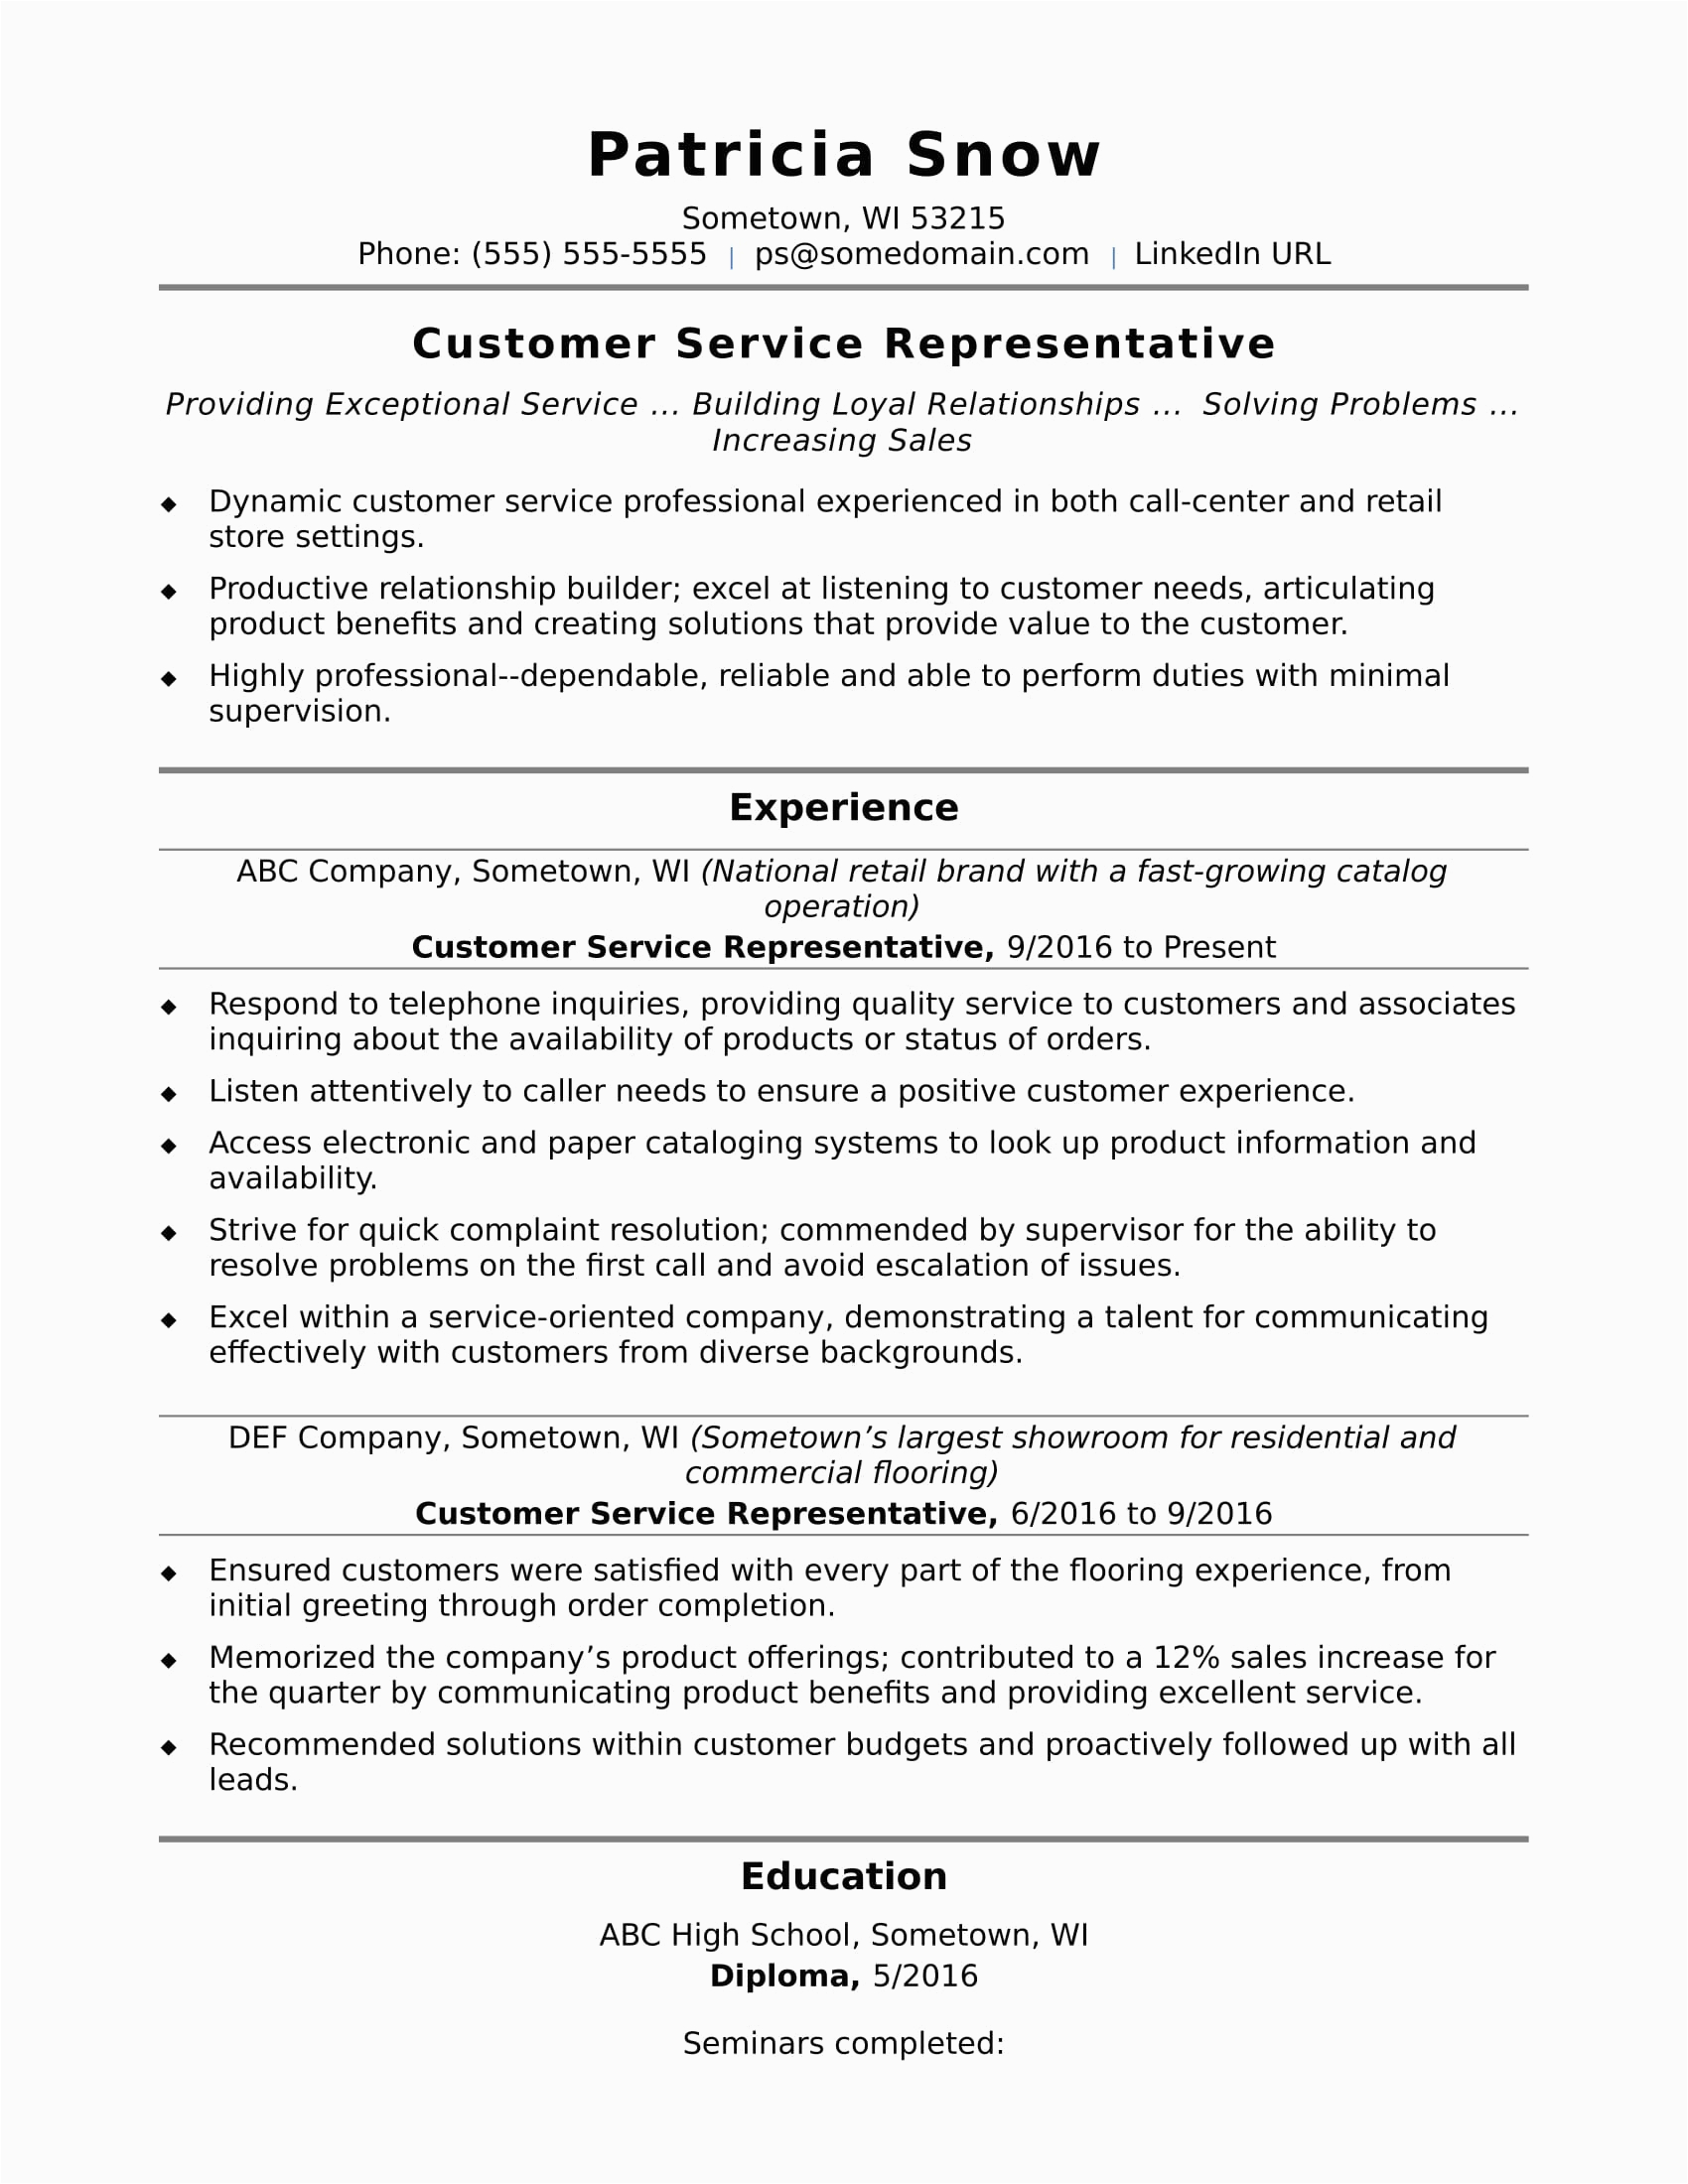 Sample Functional Resume Customer Service Representative Customer Service Representative Resume Sample